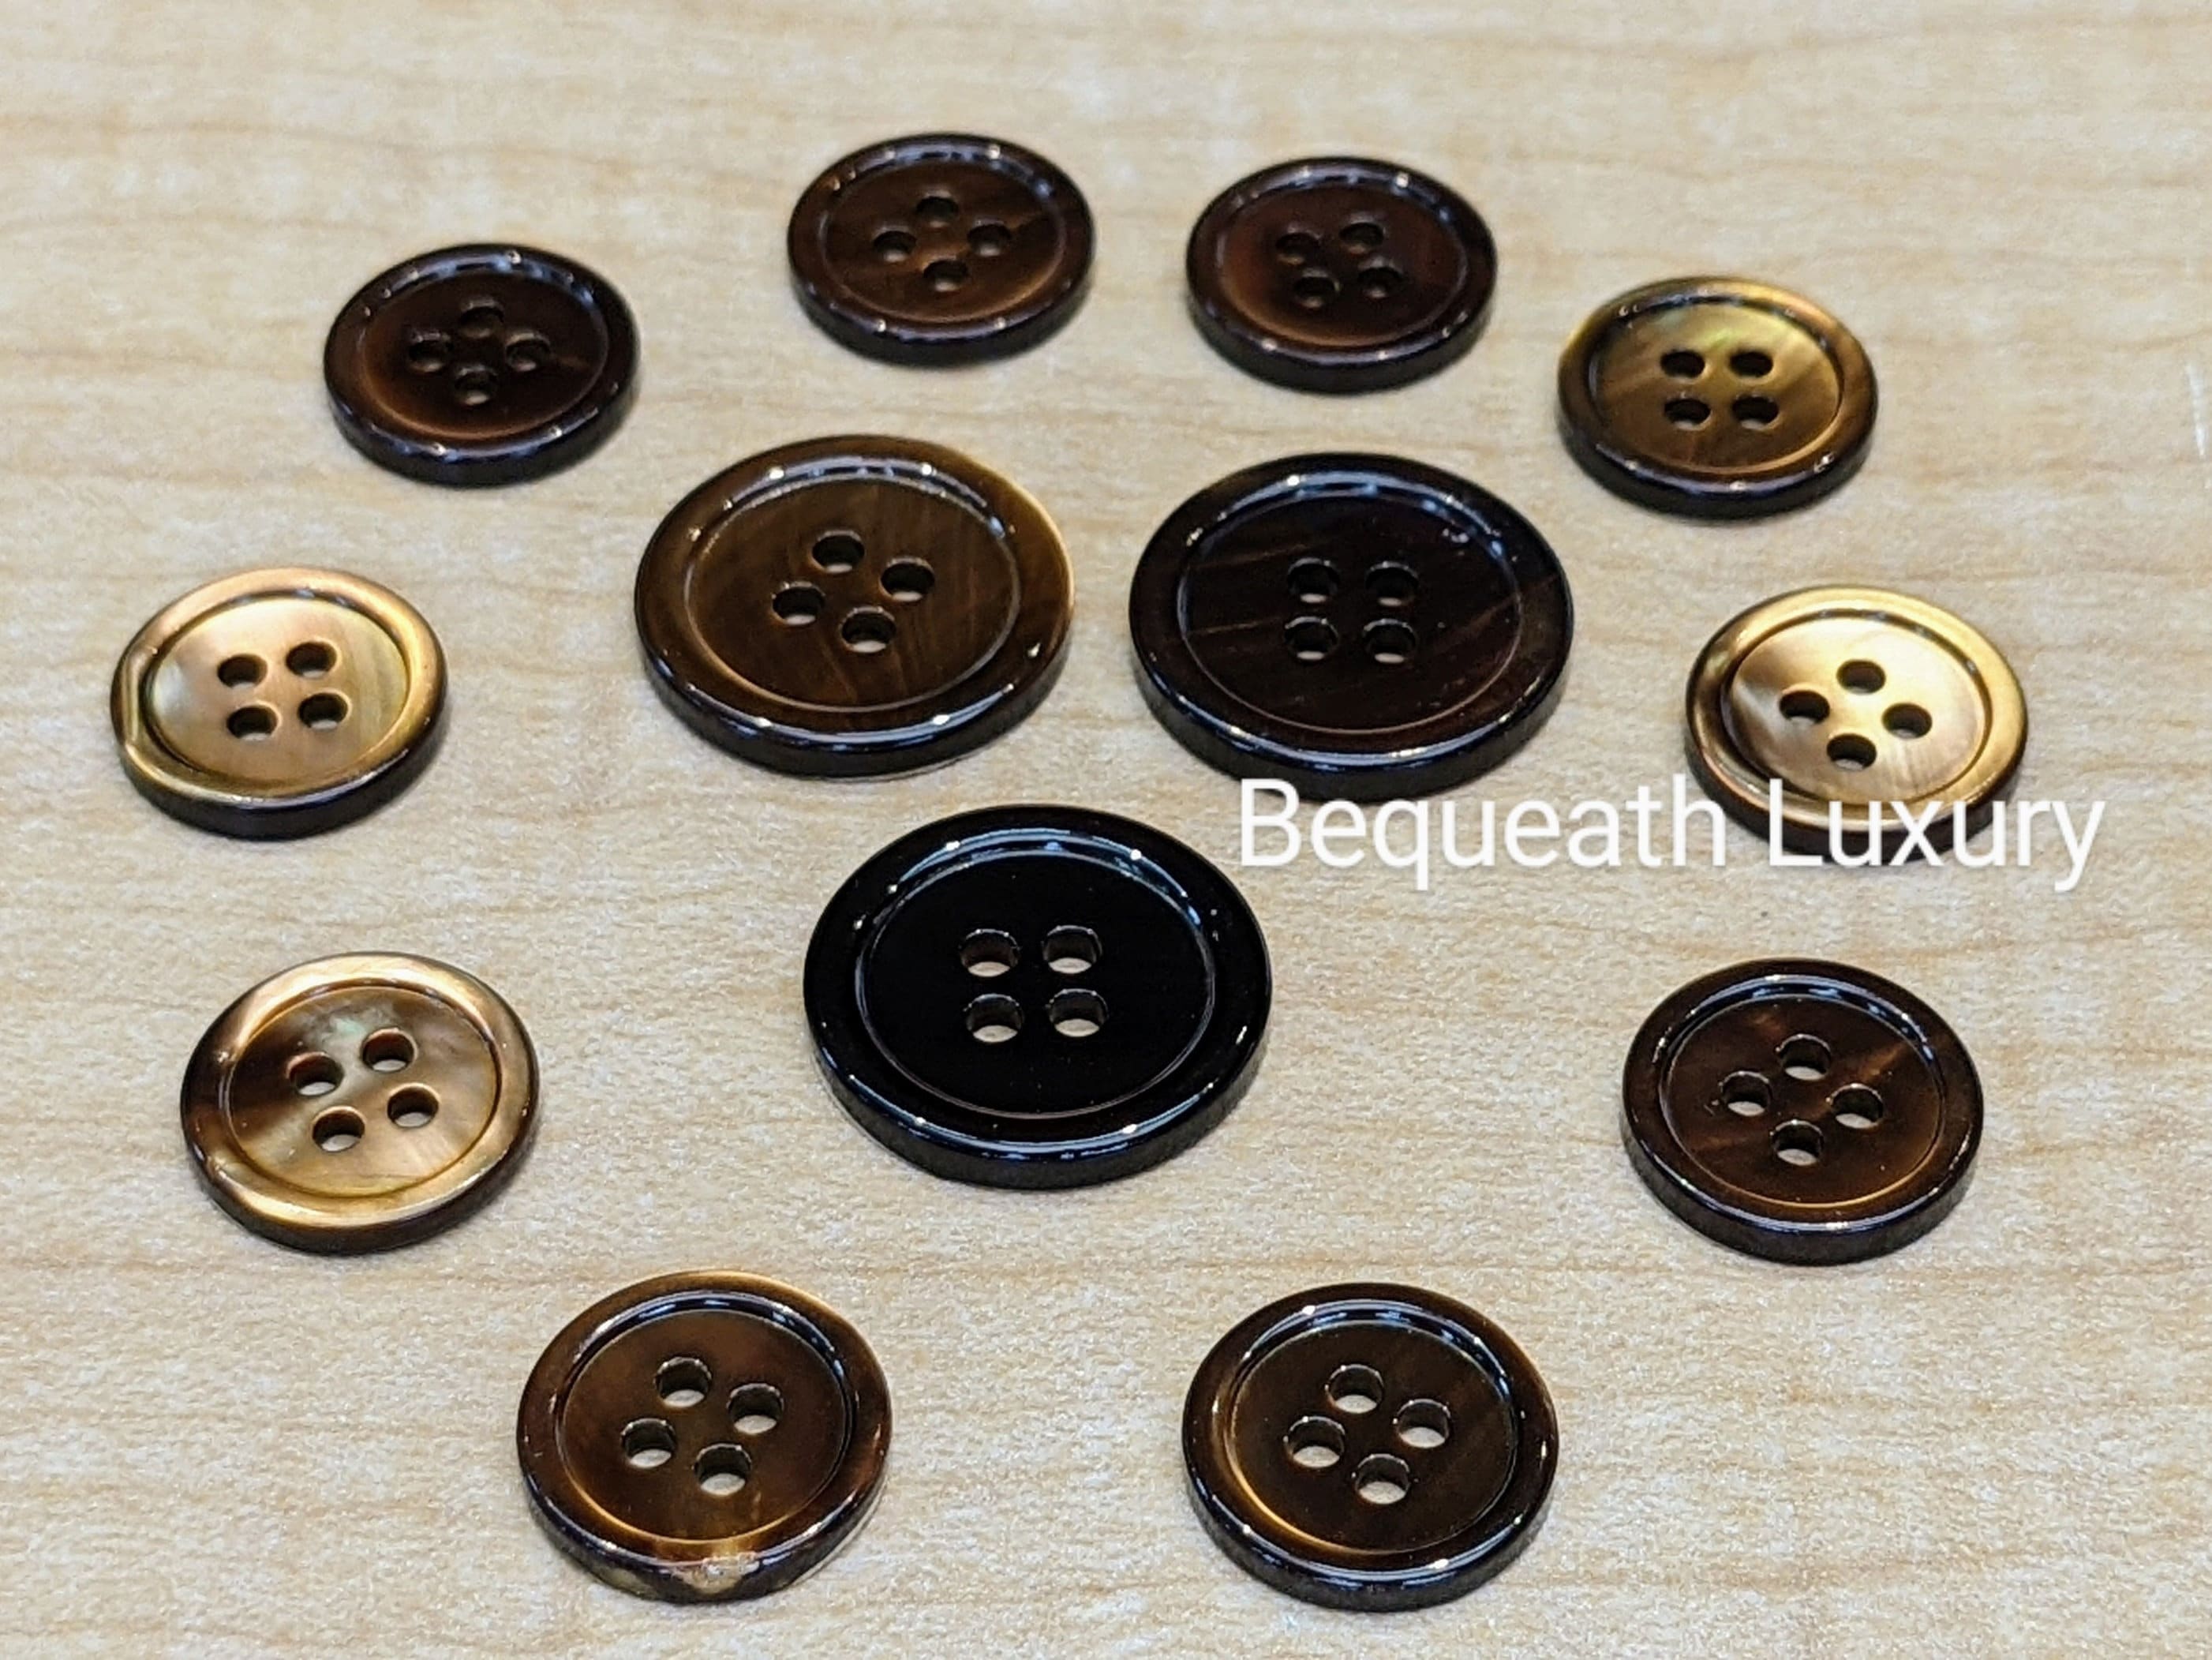 F&G 14pcs Gold Buttons Vintage High -Grade Shiny Gold Metal Blazer Button Set 15mm 23mm for Men's Blazers, Suits, Sport Coats, Uniform, Jackets